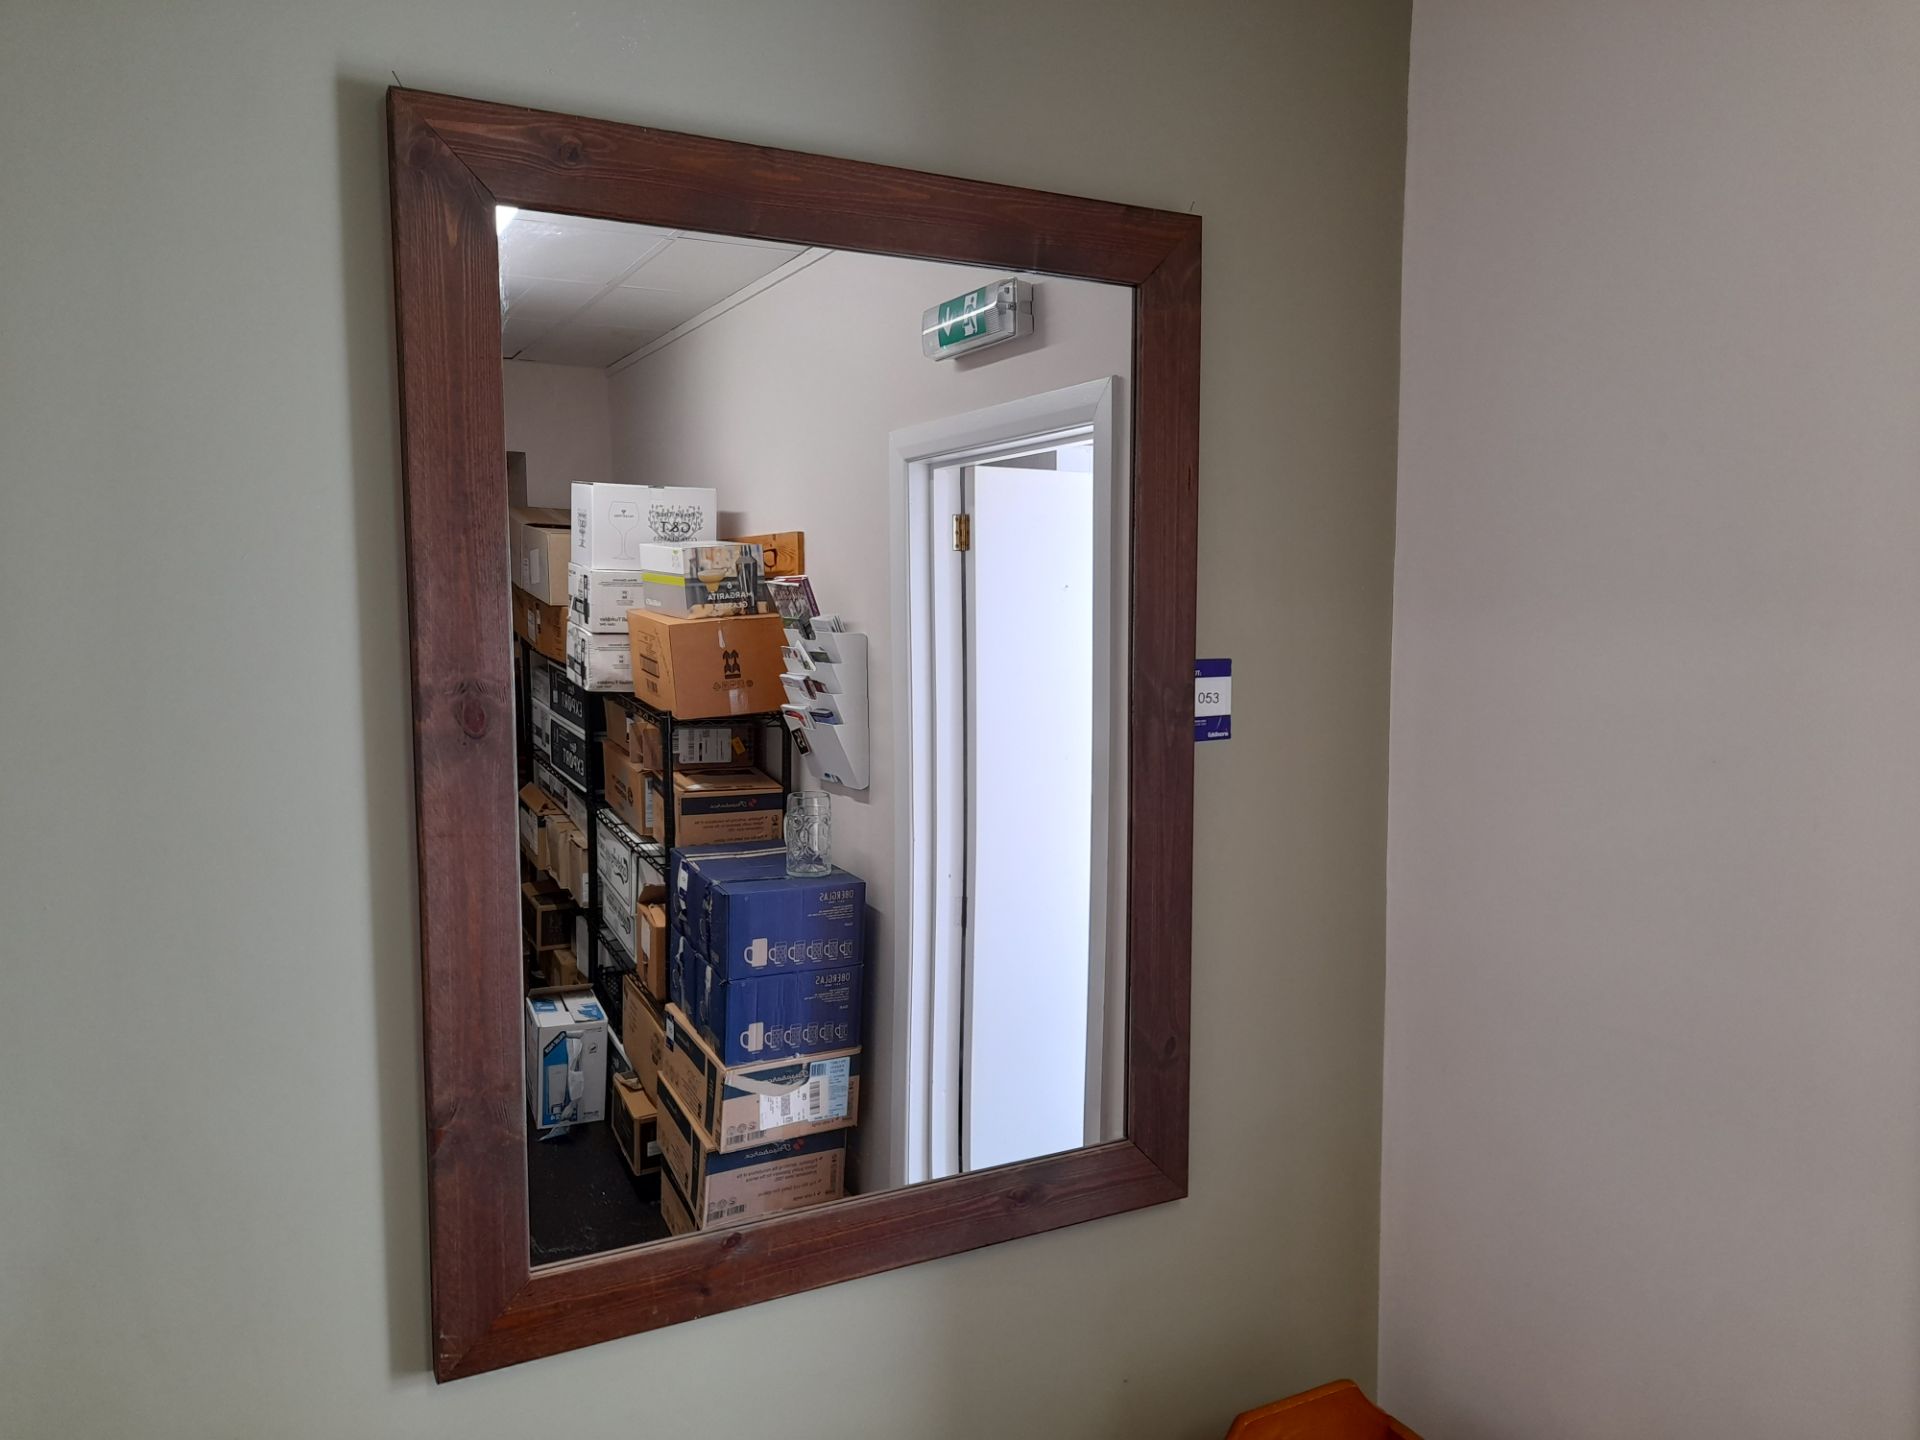 1160mm x 860mm wooden framed mirror – Located Telf